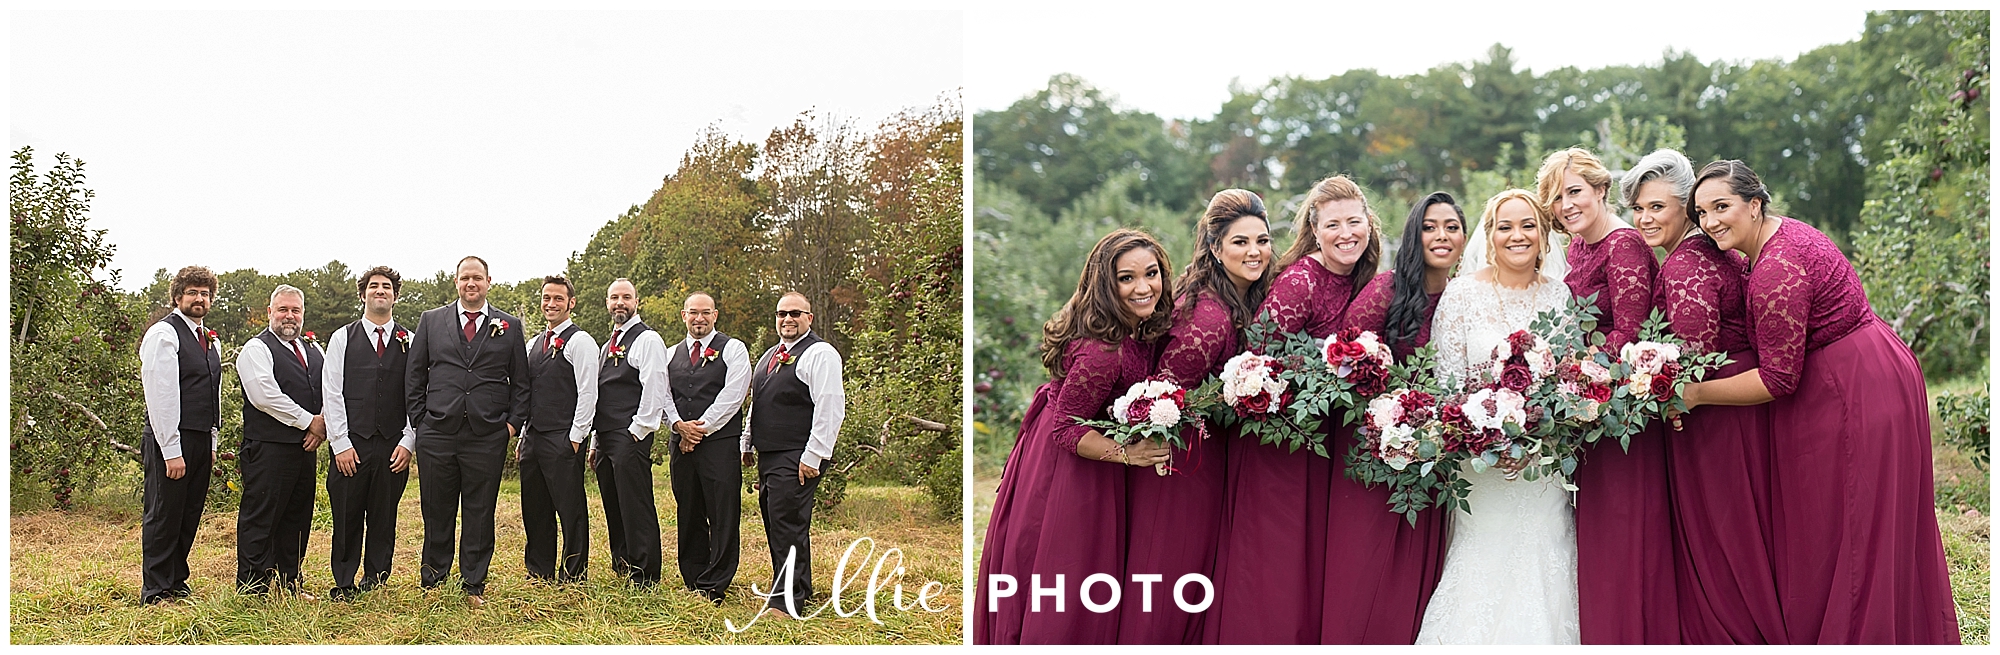 Massachusetts_wedding_photographer_red_apple_farm_boston_0028.jpg